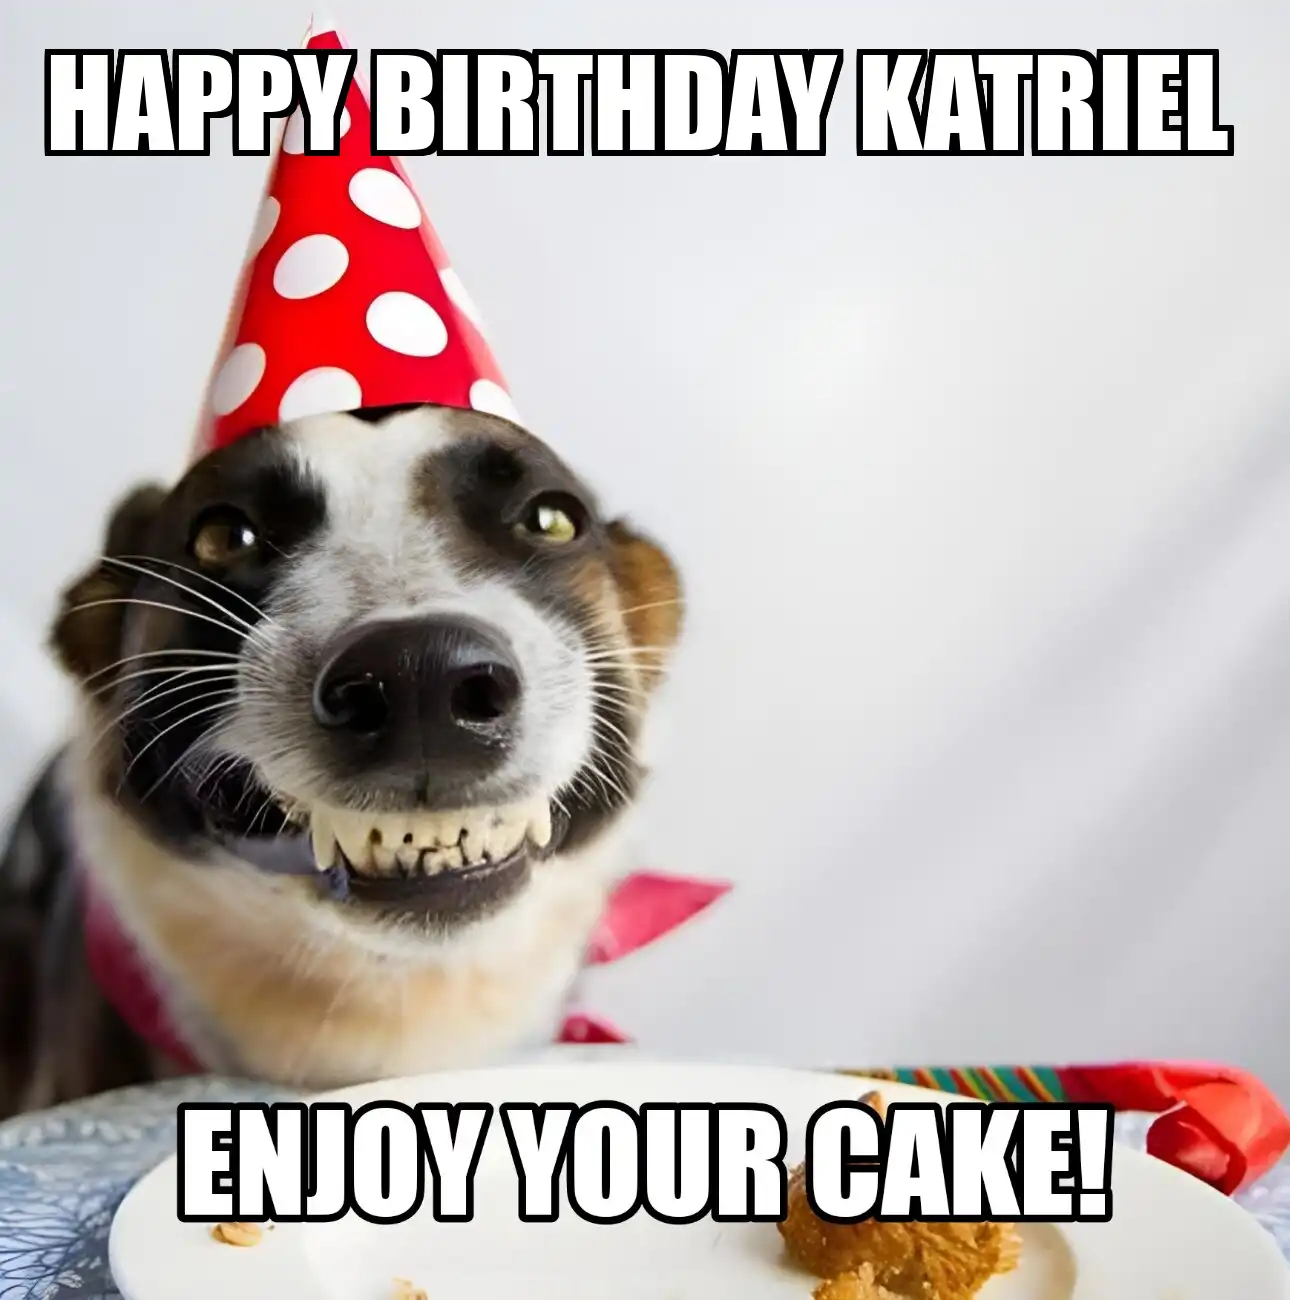 Happy Birthday Katriel Enjoy Your Cake Dog Meme